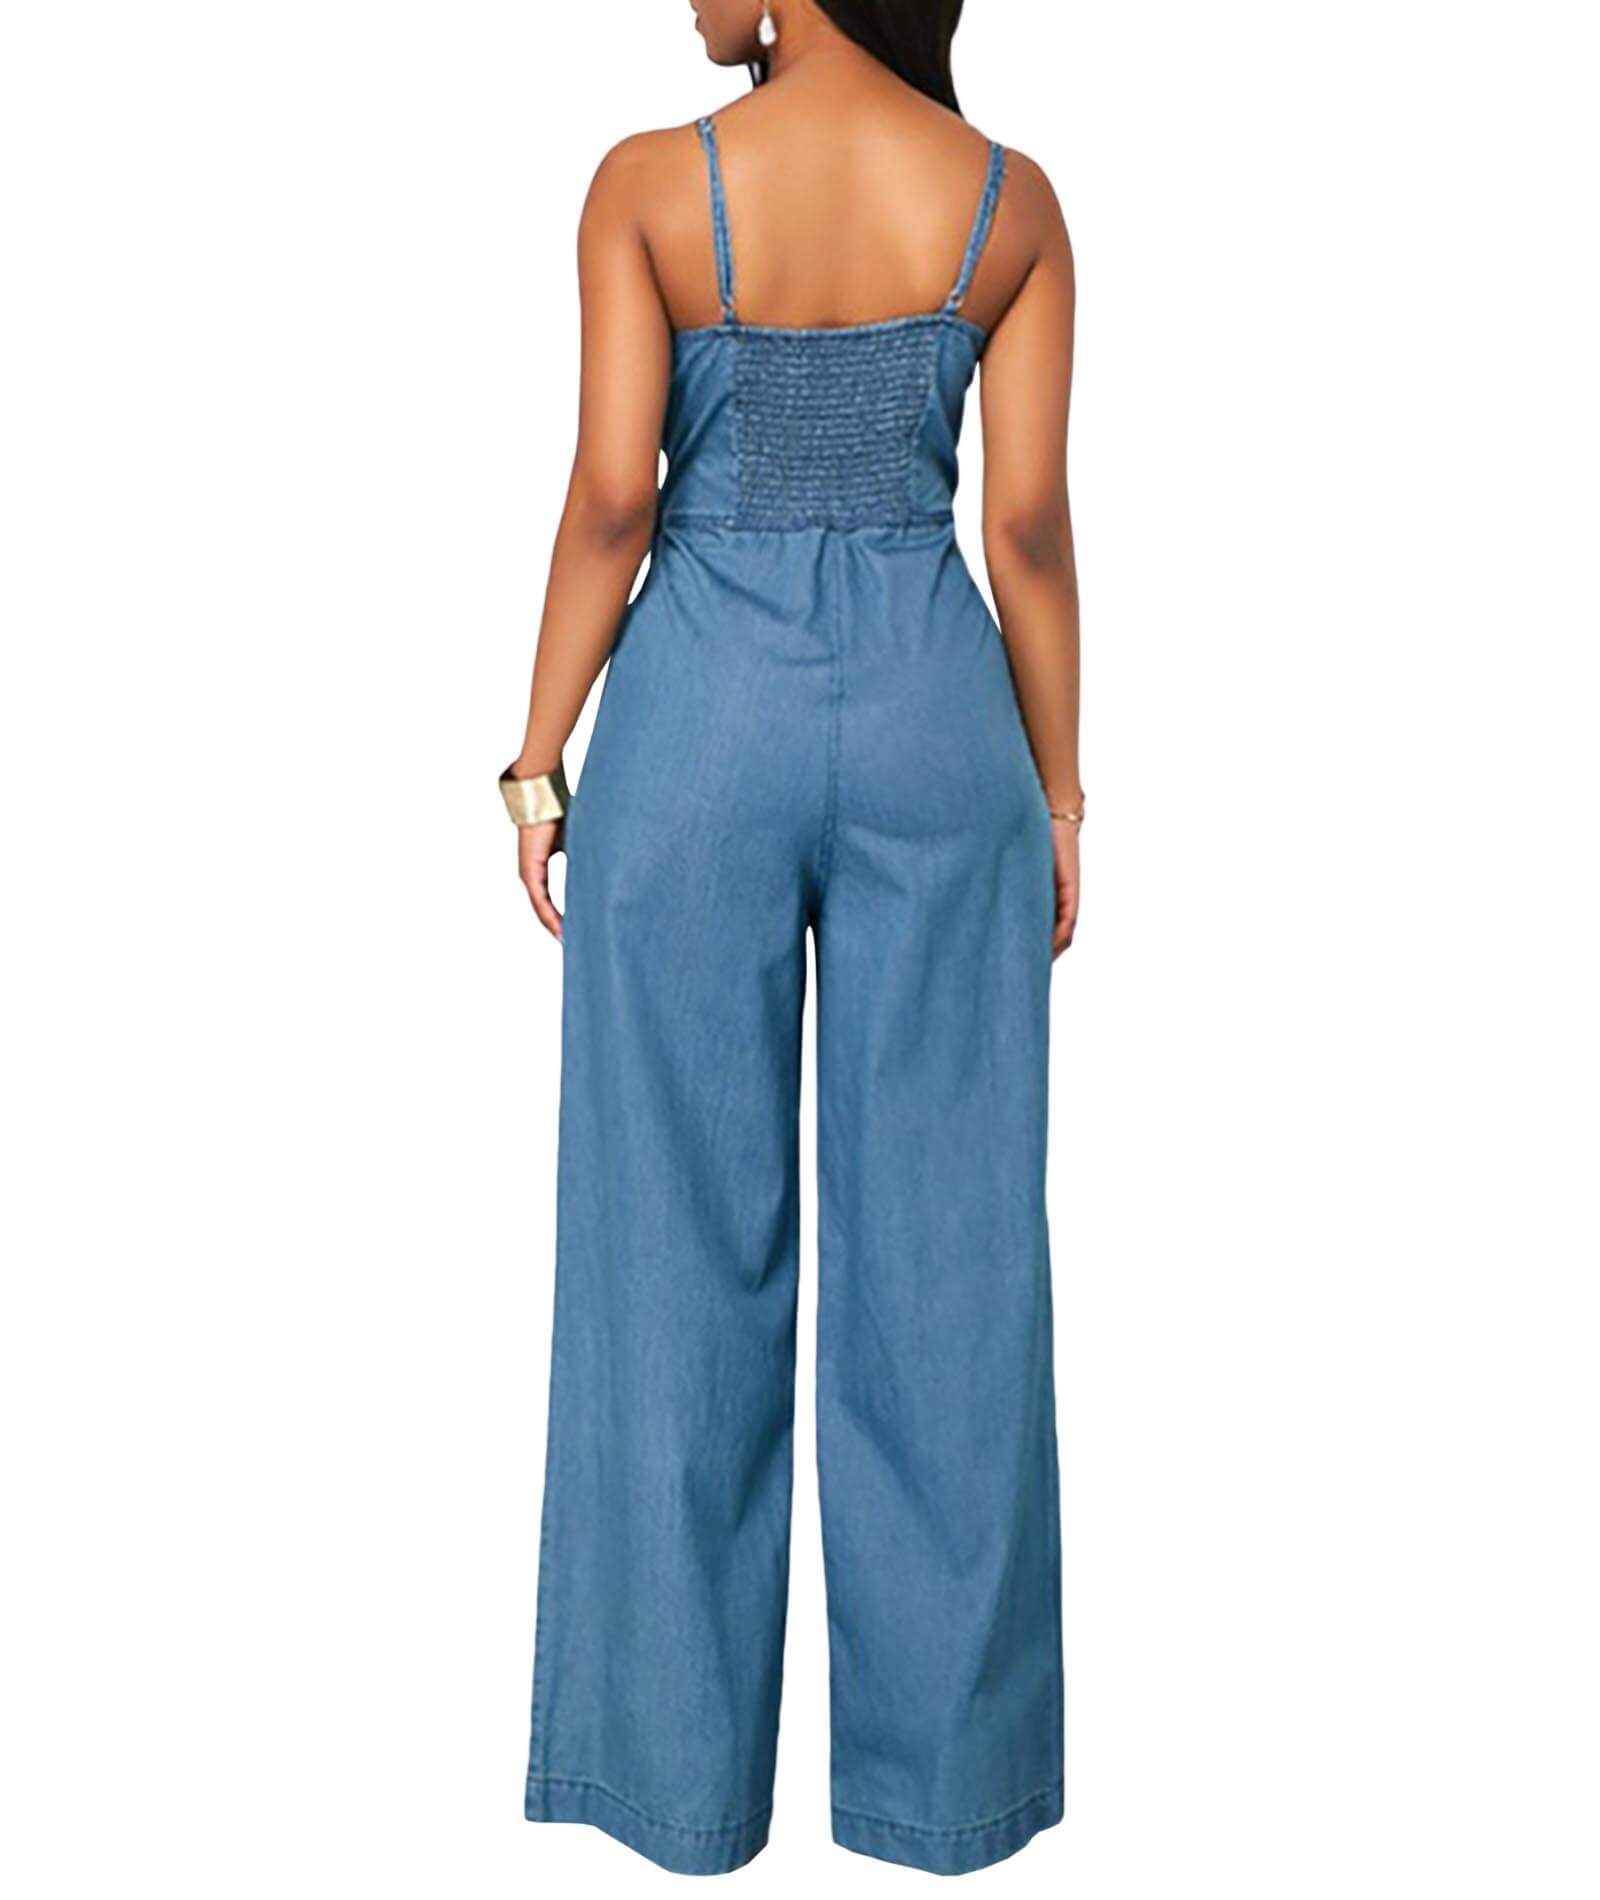  Women's Spaghetti Strap Wide Leg Denim Blue Long Jumpsuit Playsuit Rompers(9277LB,S)